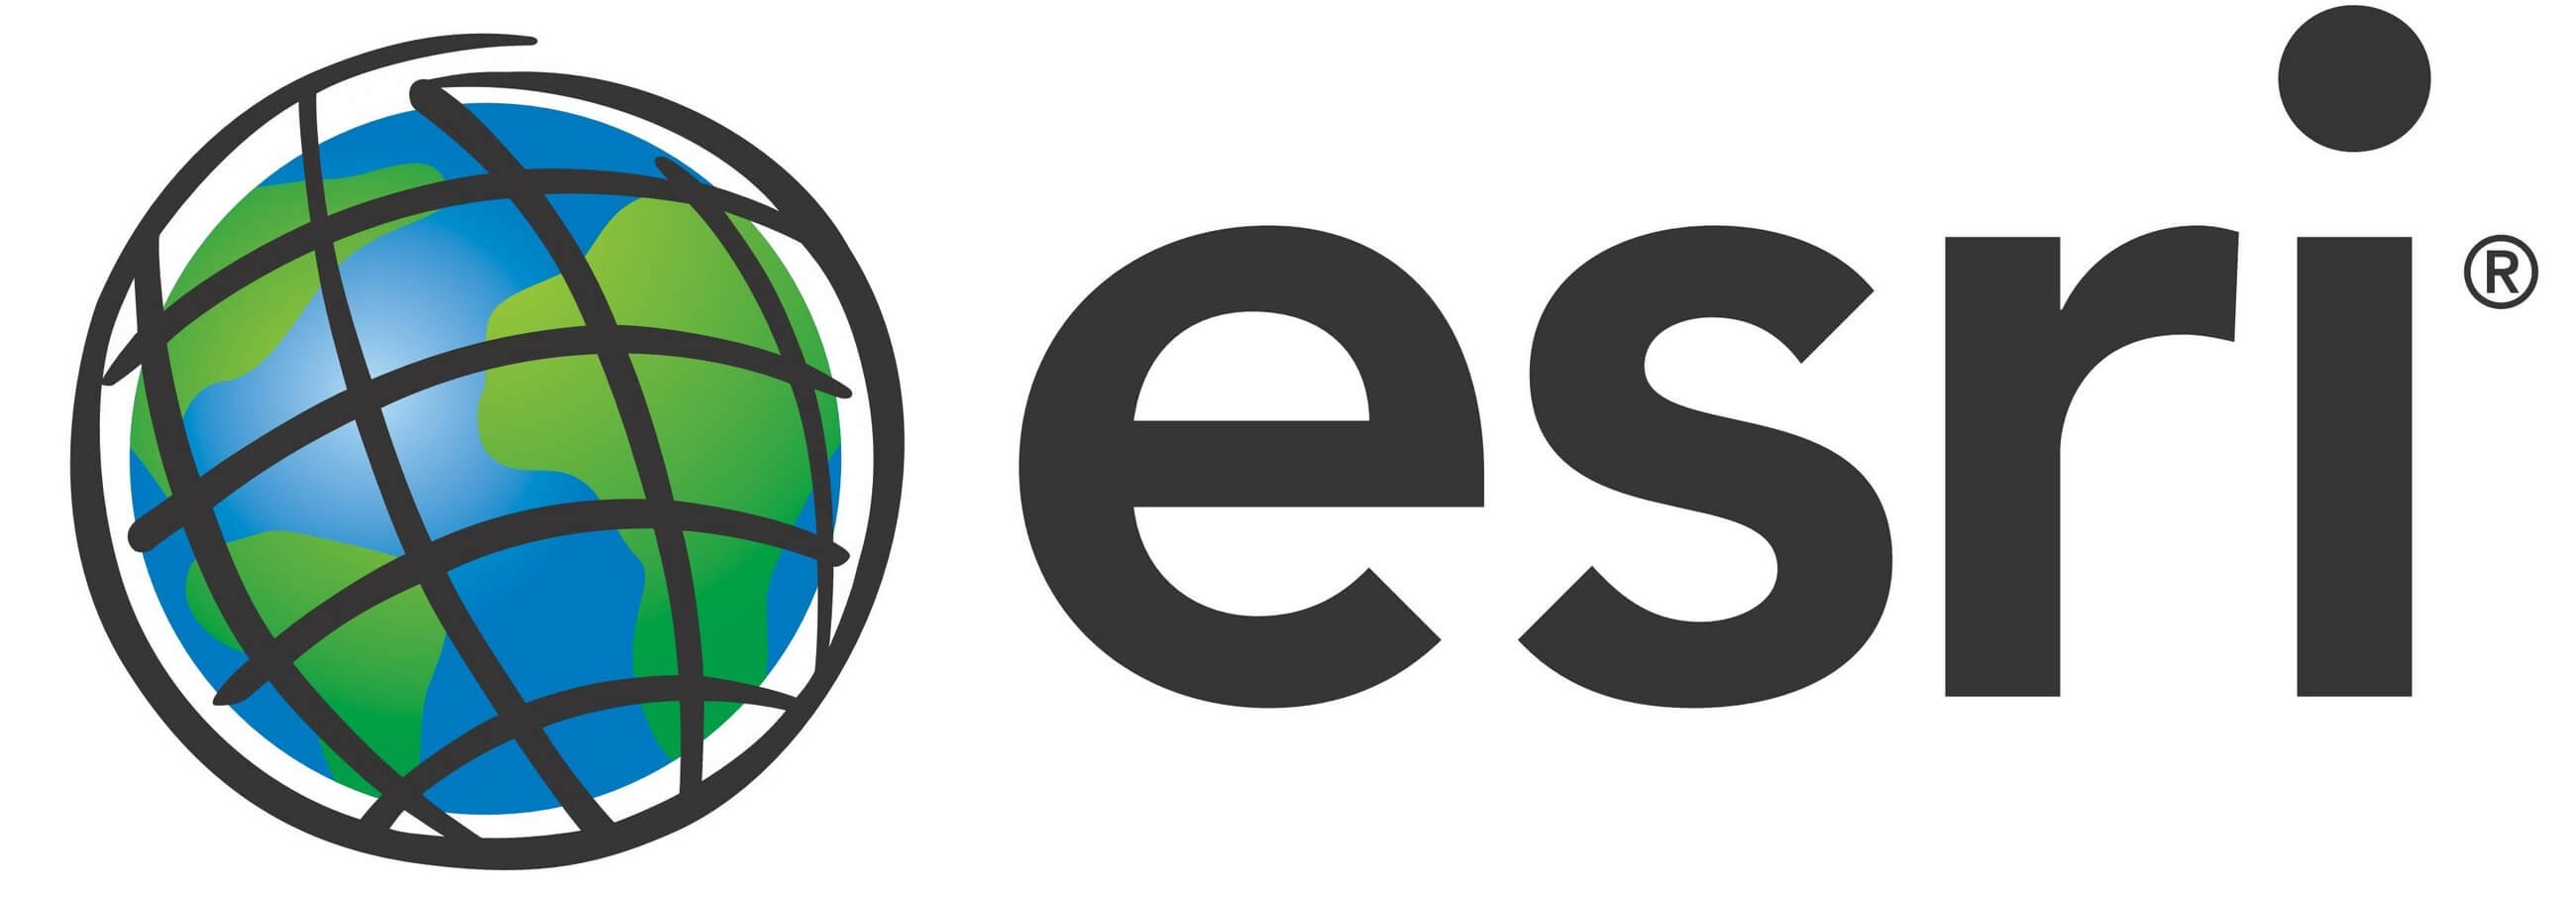 Esri Logo [JPG]